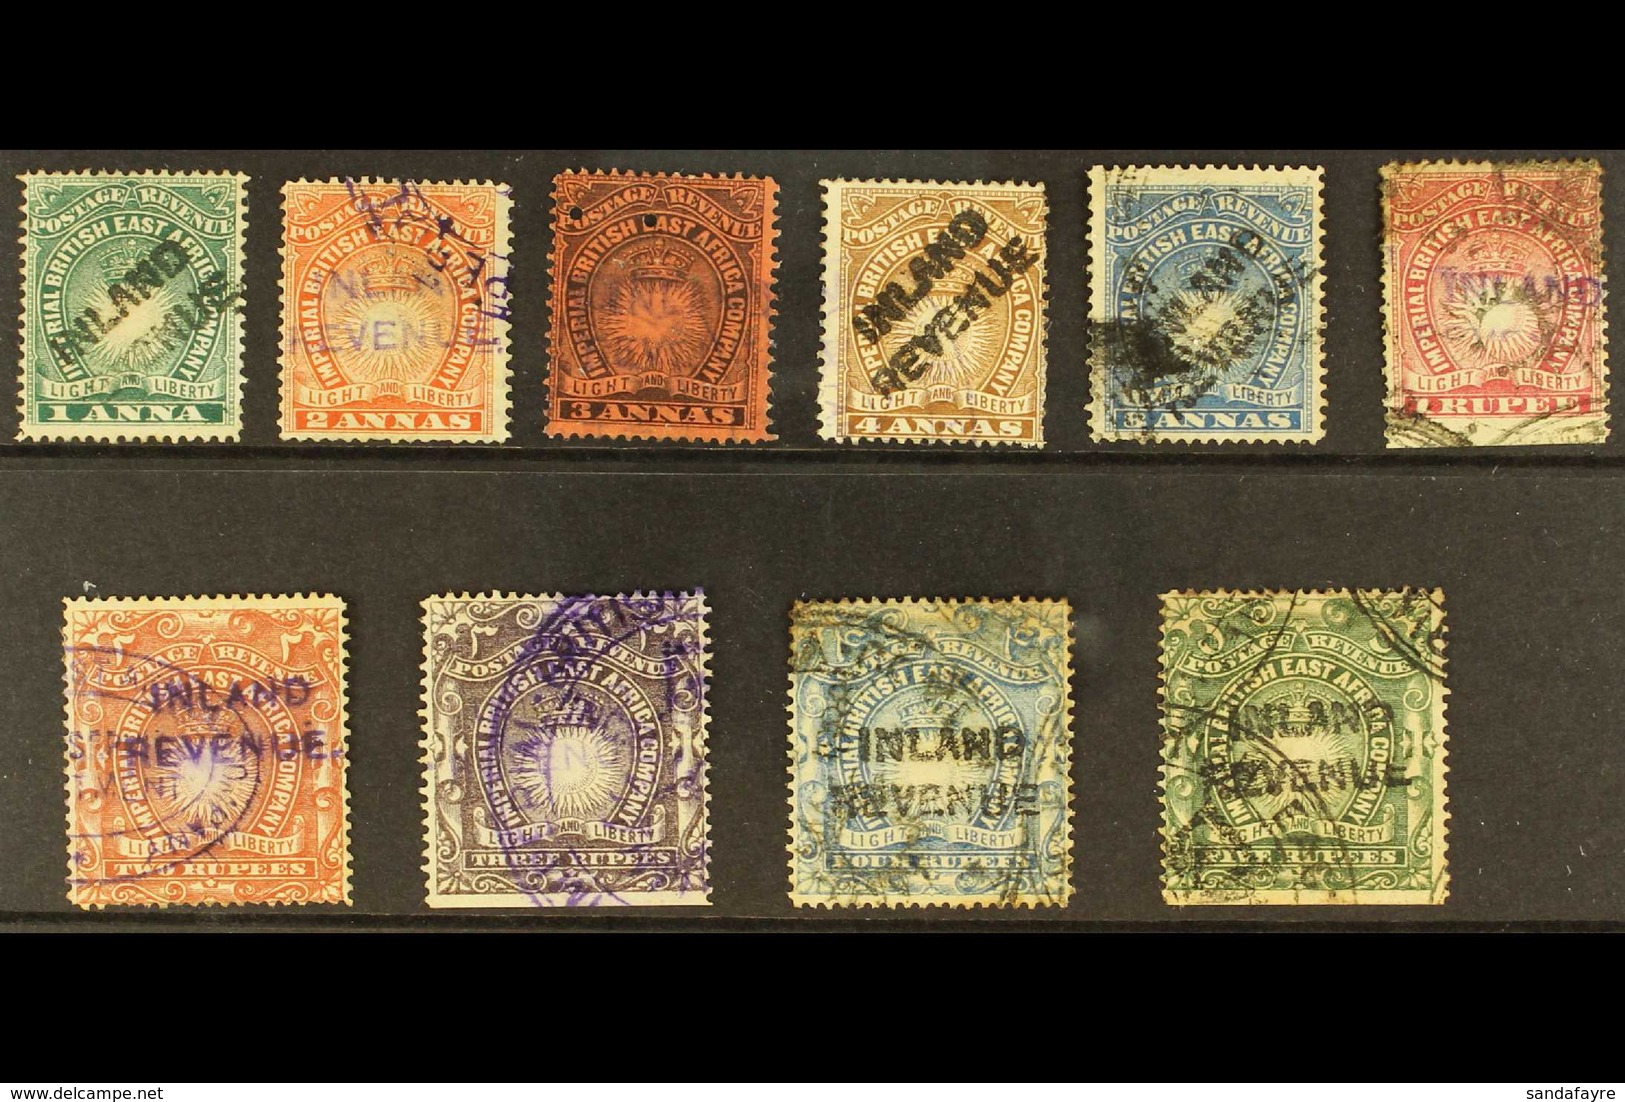 REVENUE STAMPS Circa 1891 Imperial British East Africa Postage Stamps With "INLAND REVENUE" Handstamps - Ten Different V - Afrique Orientale Britannique